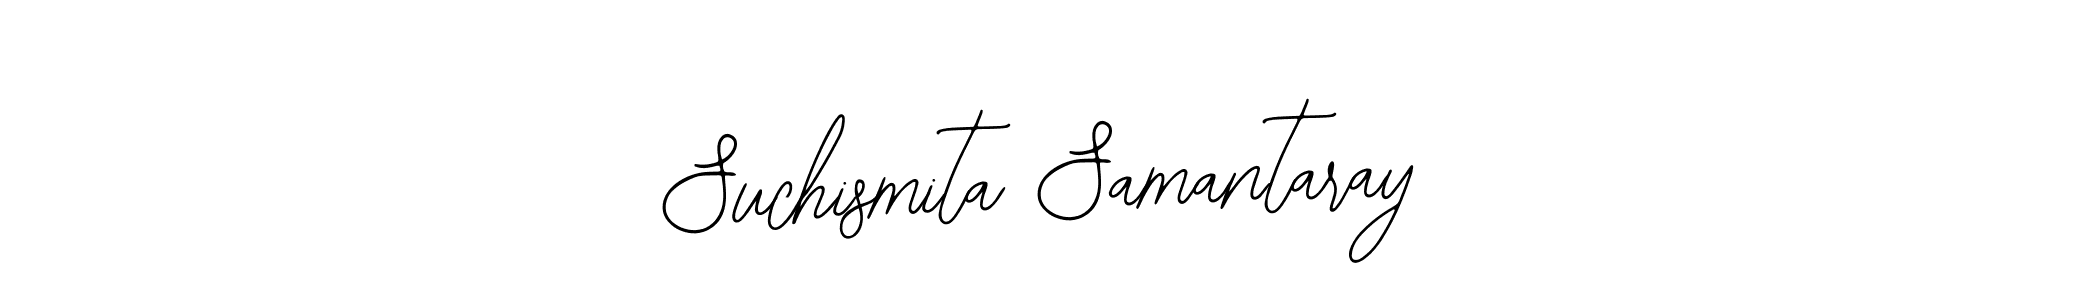 How to Draw Suchismita Samantaray signature style? Bearetta-2O07w is a latest design signature styles for name Suchismita Samantaray. Suchismita Samantaray signature style 12 images and pictures png